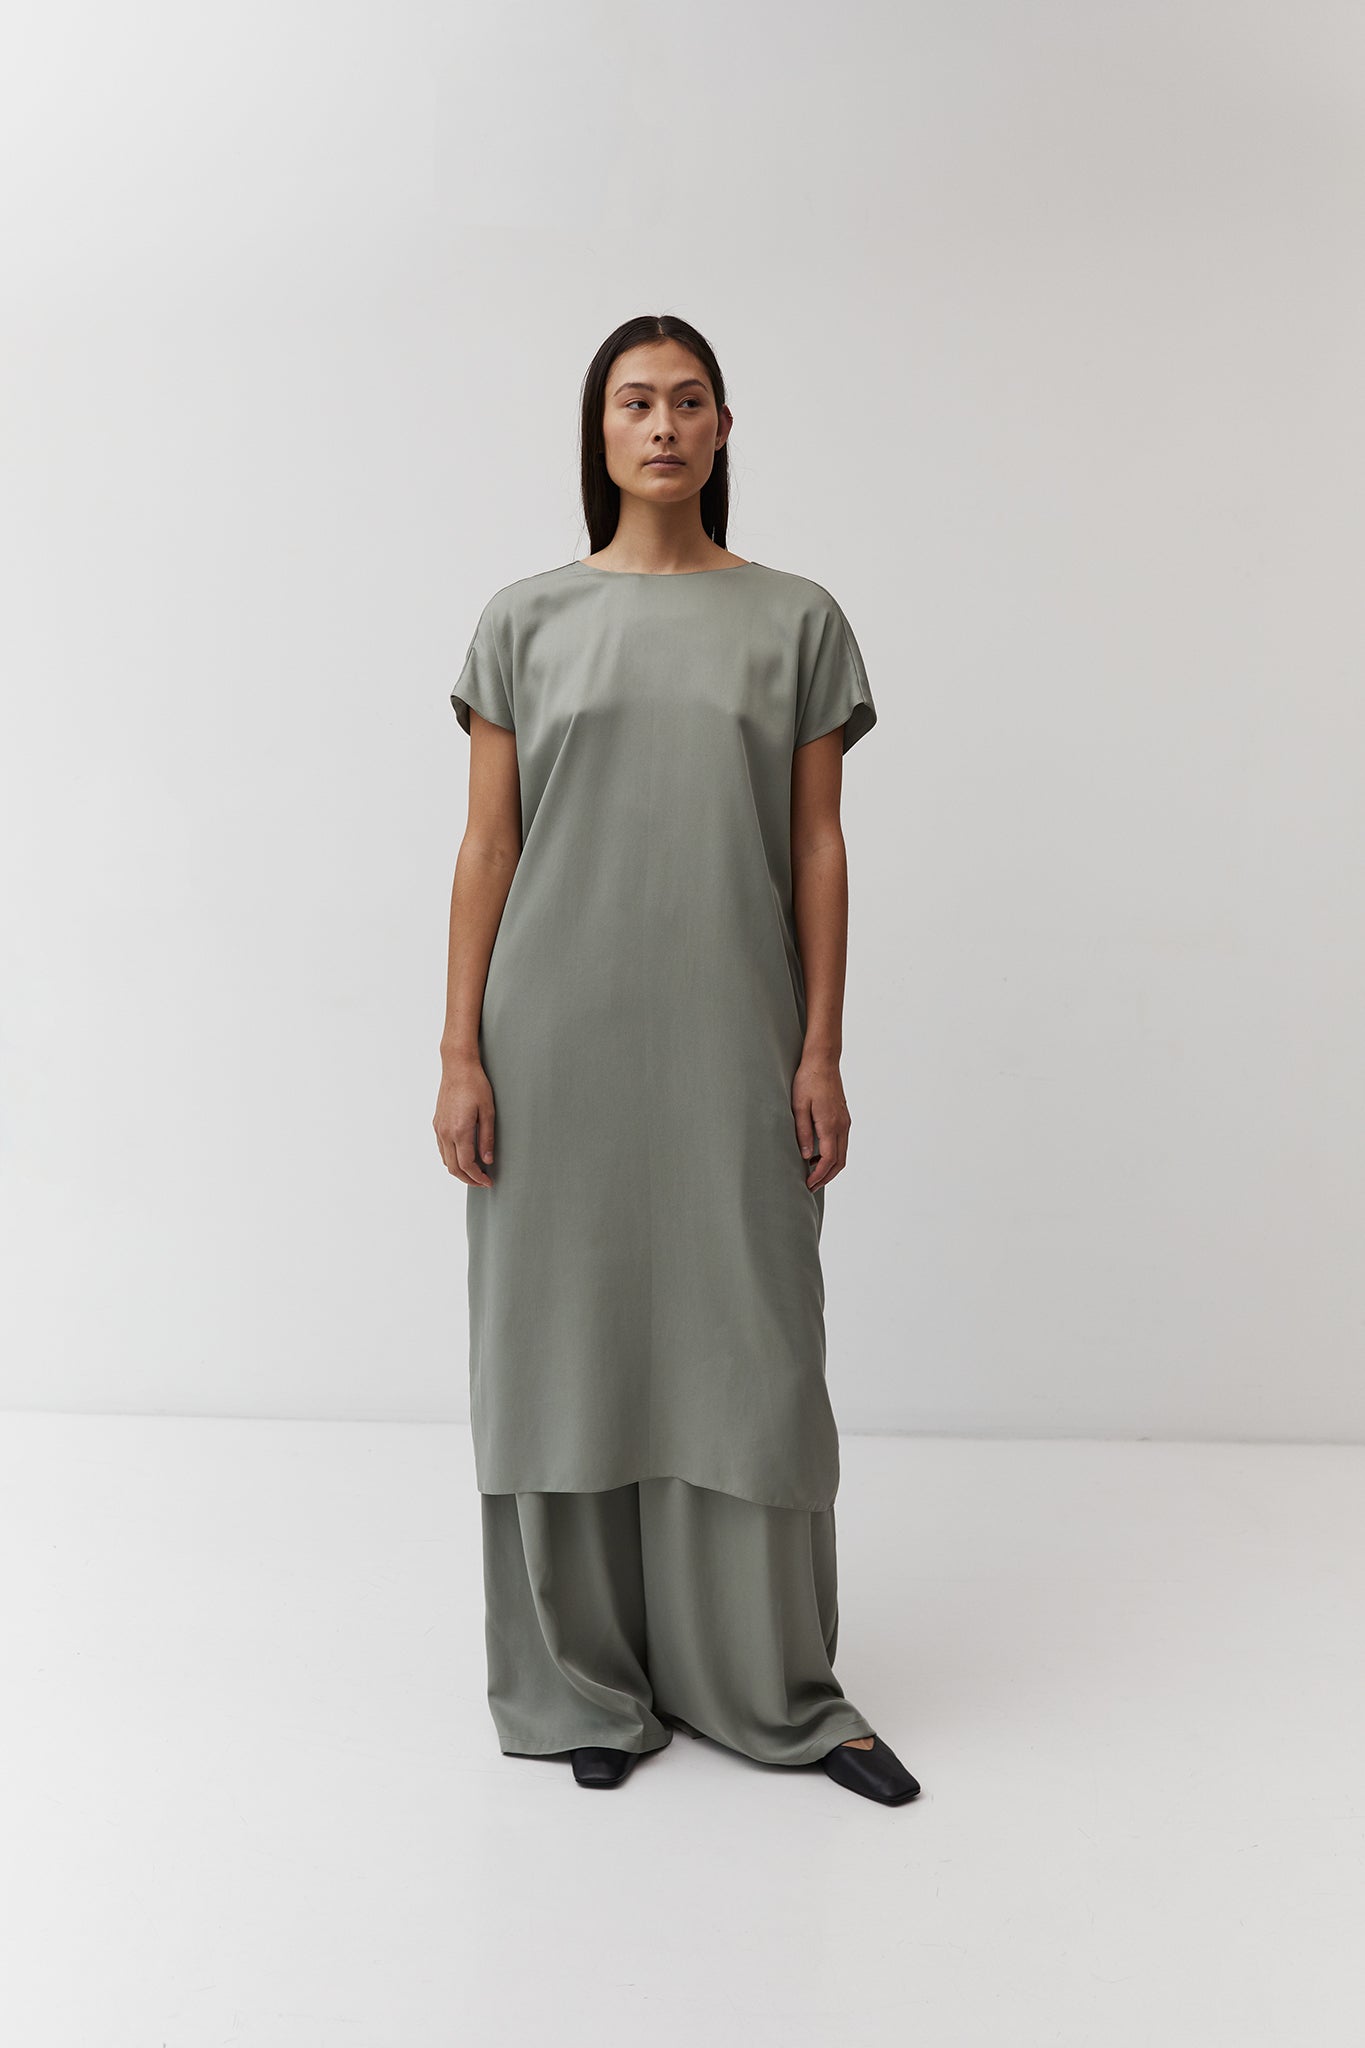 The Array womenswear fashion label london fashion brand workwear womens fashion Reversible Dress in Sage Tencel